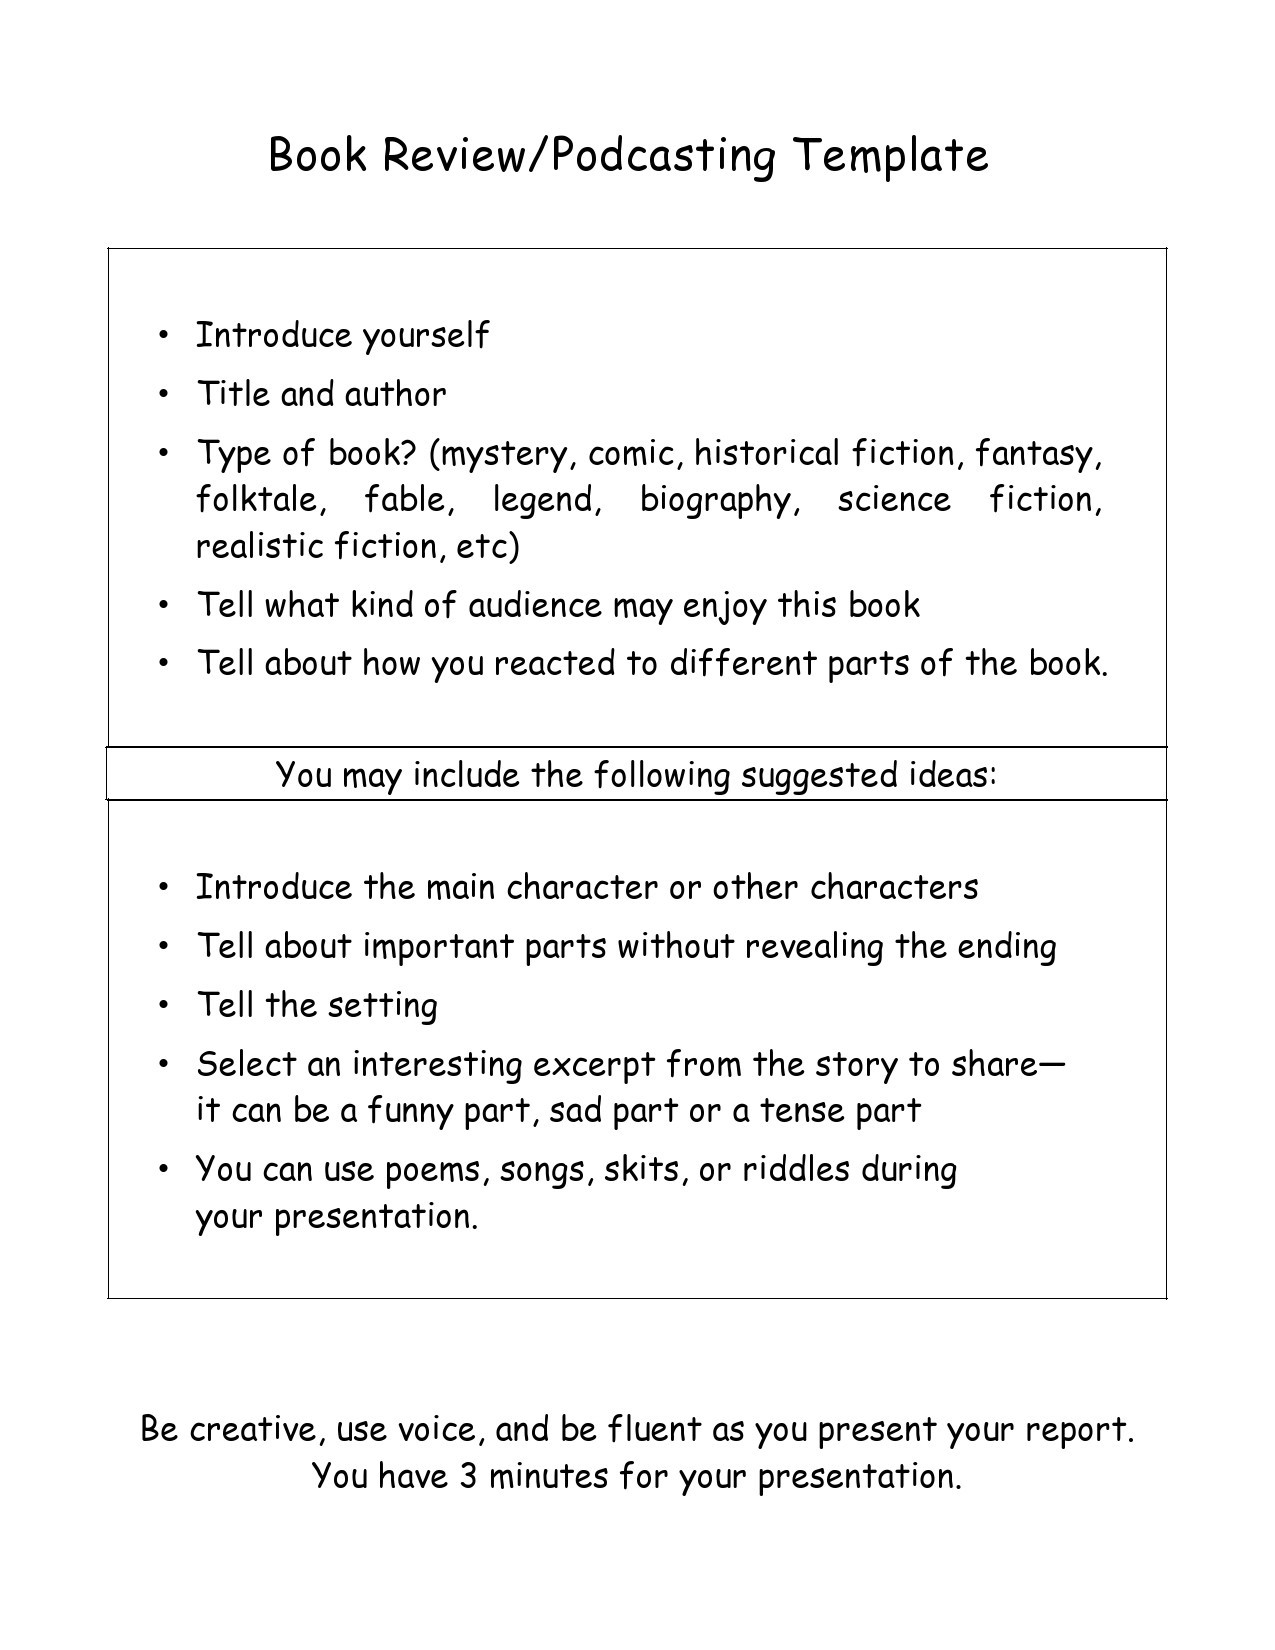 50-best-book-review-templates-kids-middle-school-etc-templatelab